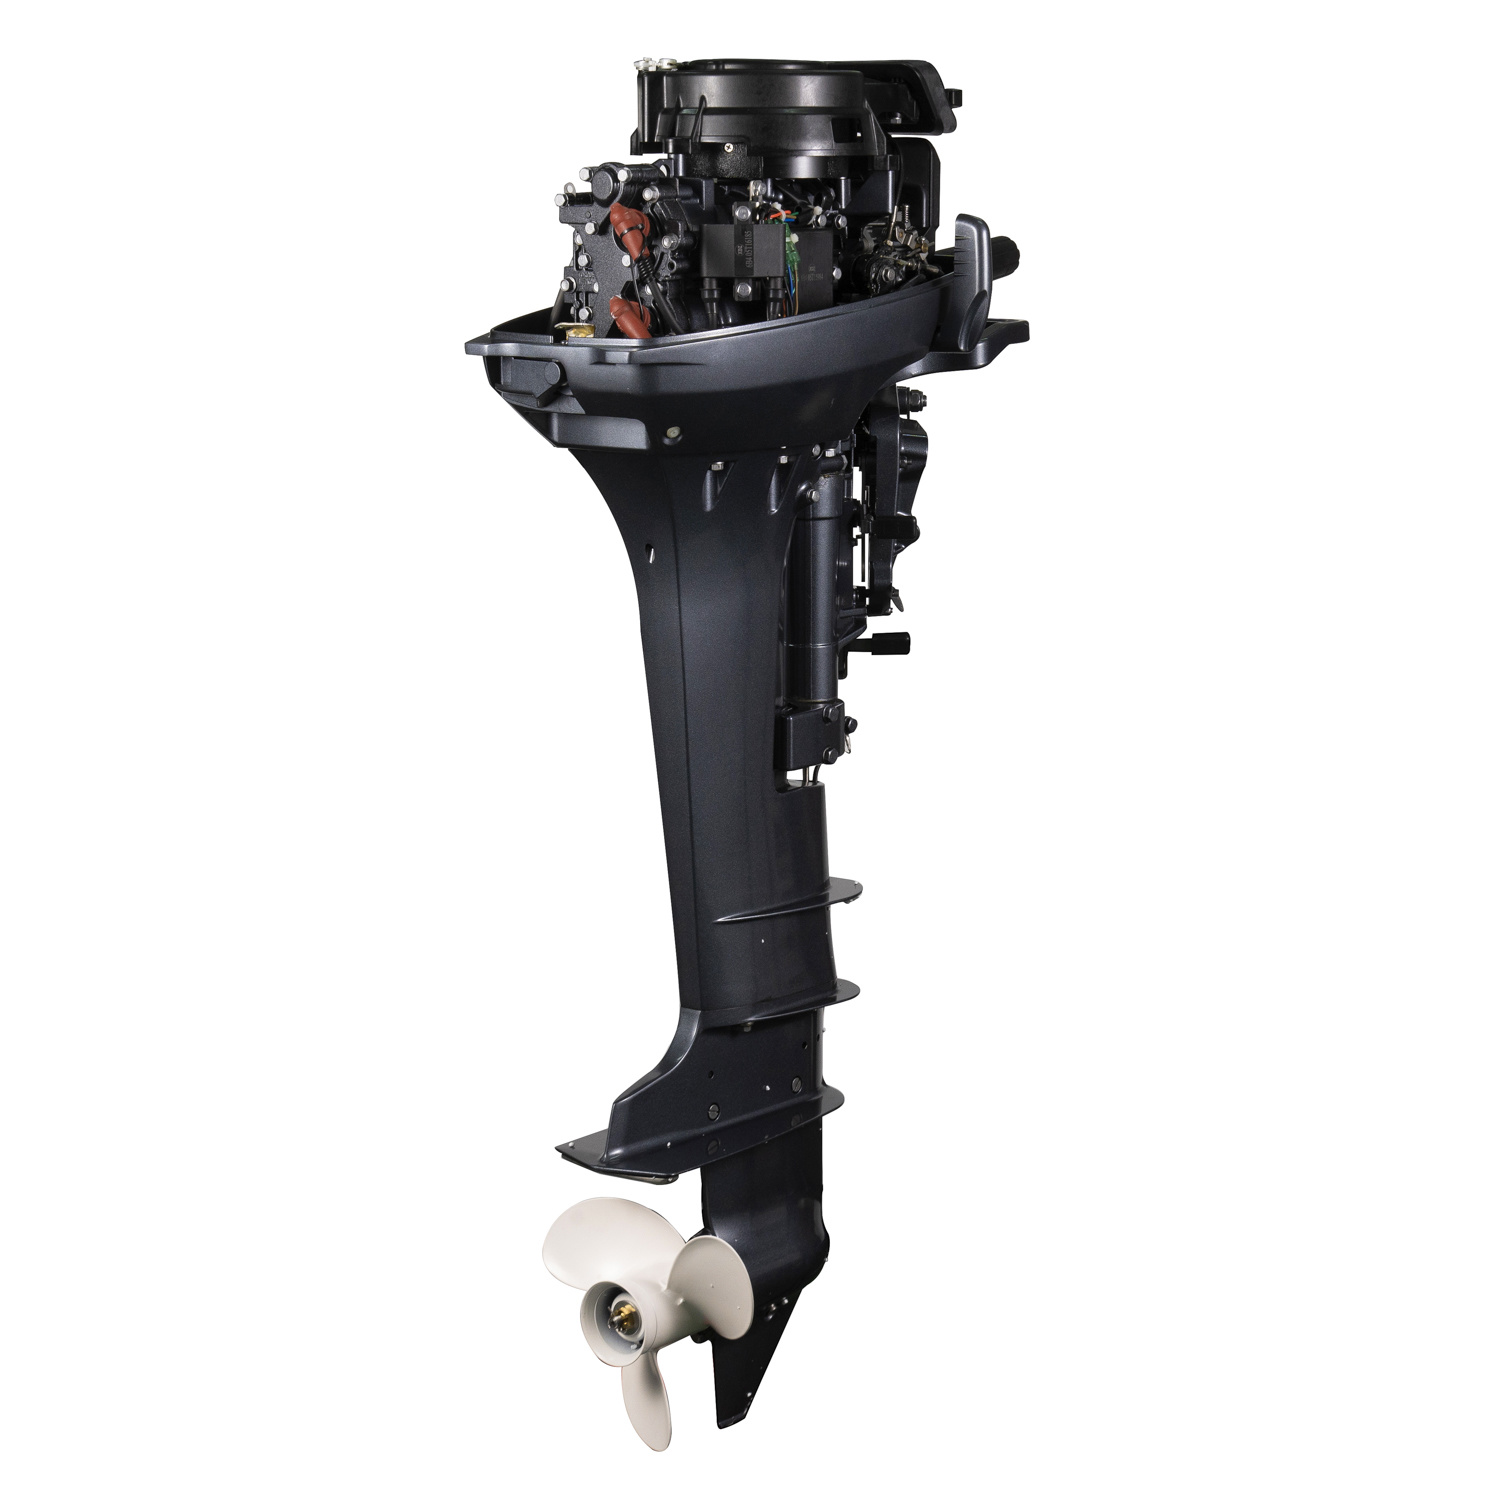 Yamarime 9.9HP 15HP Outboard Motor, Outboard Engine Replace E15dmh, E9.9dmh, 6b4